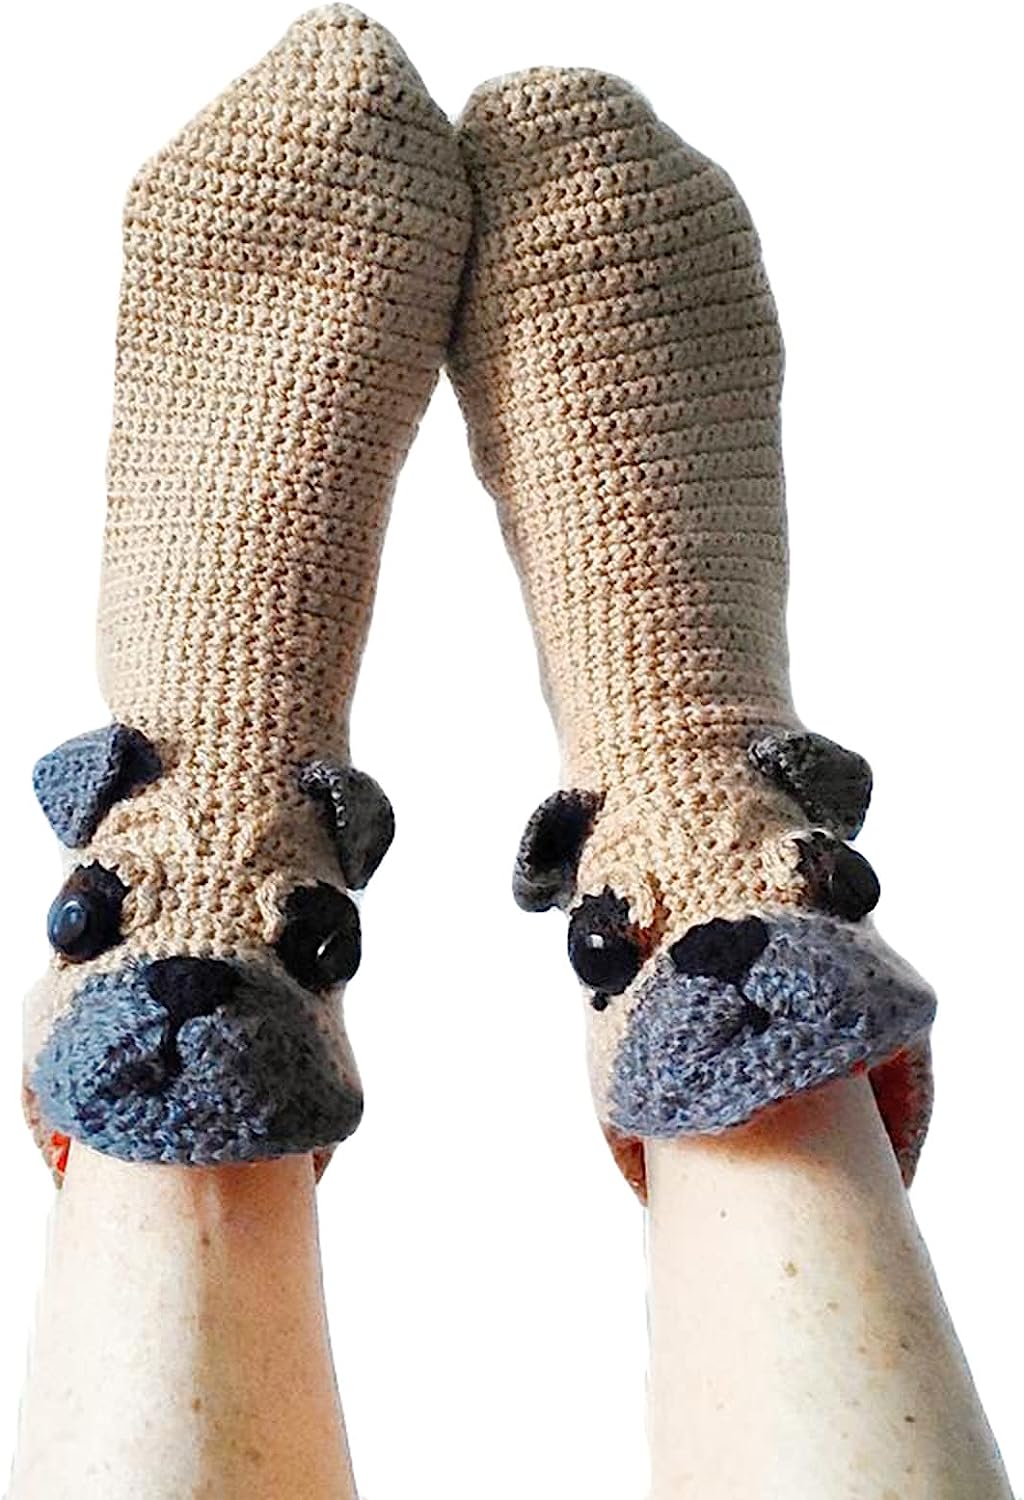 THATLILSHOP One Size / Bulldog Women Men Novelty Animal Pattern Socks Crazy Funny Knit Crocodile Socks Funny Gifts